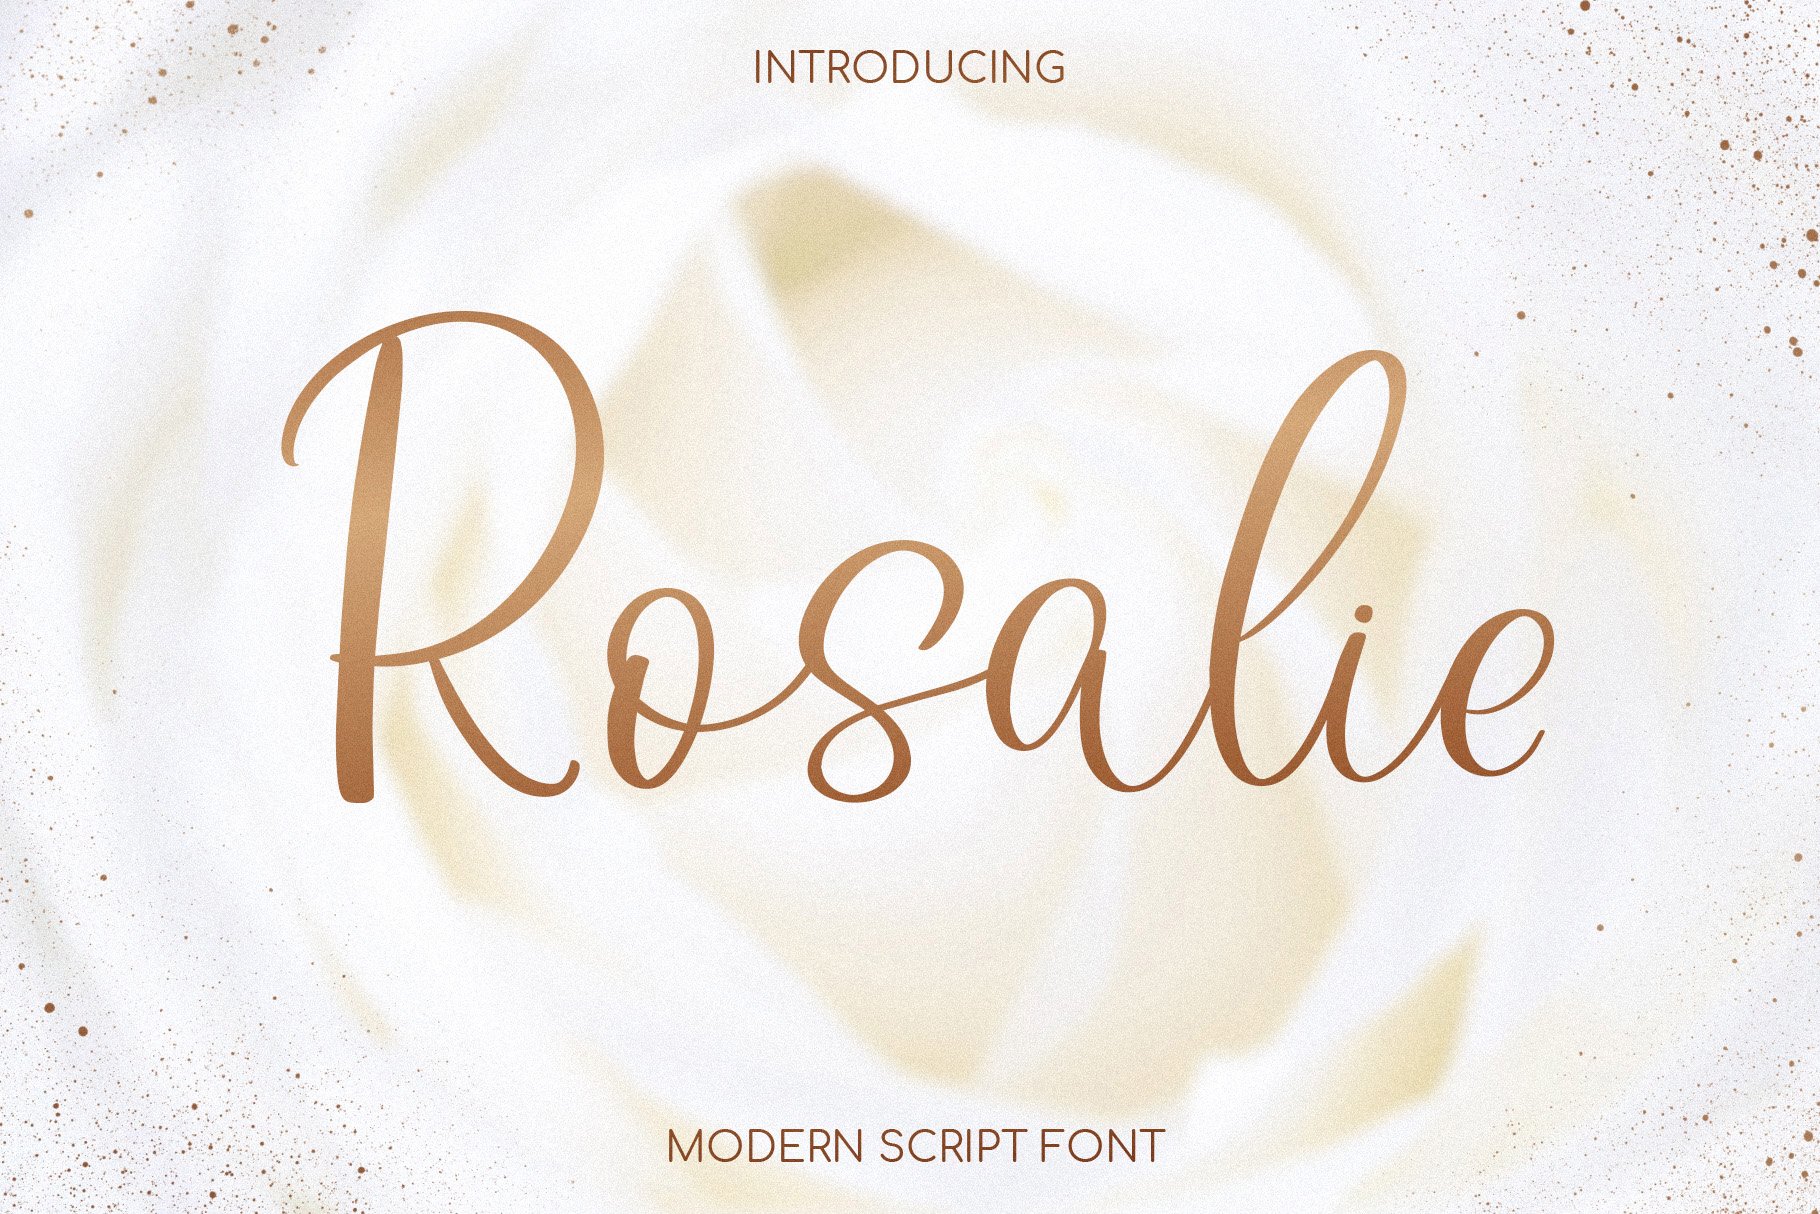 Rosalie - modern script cover image.